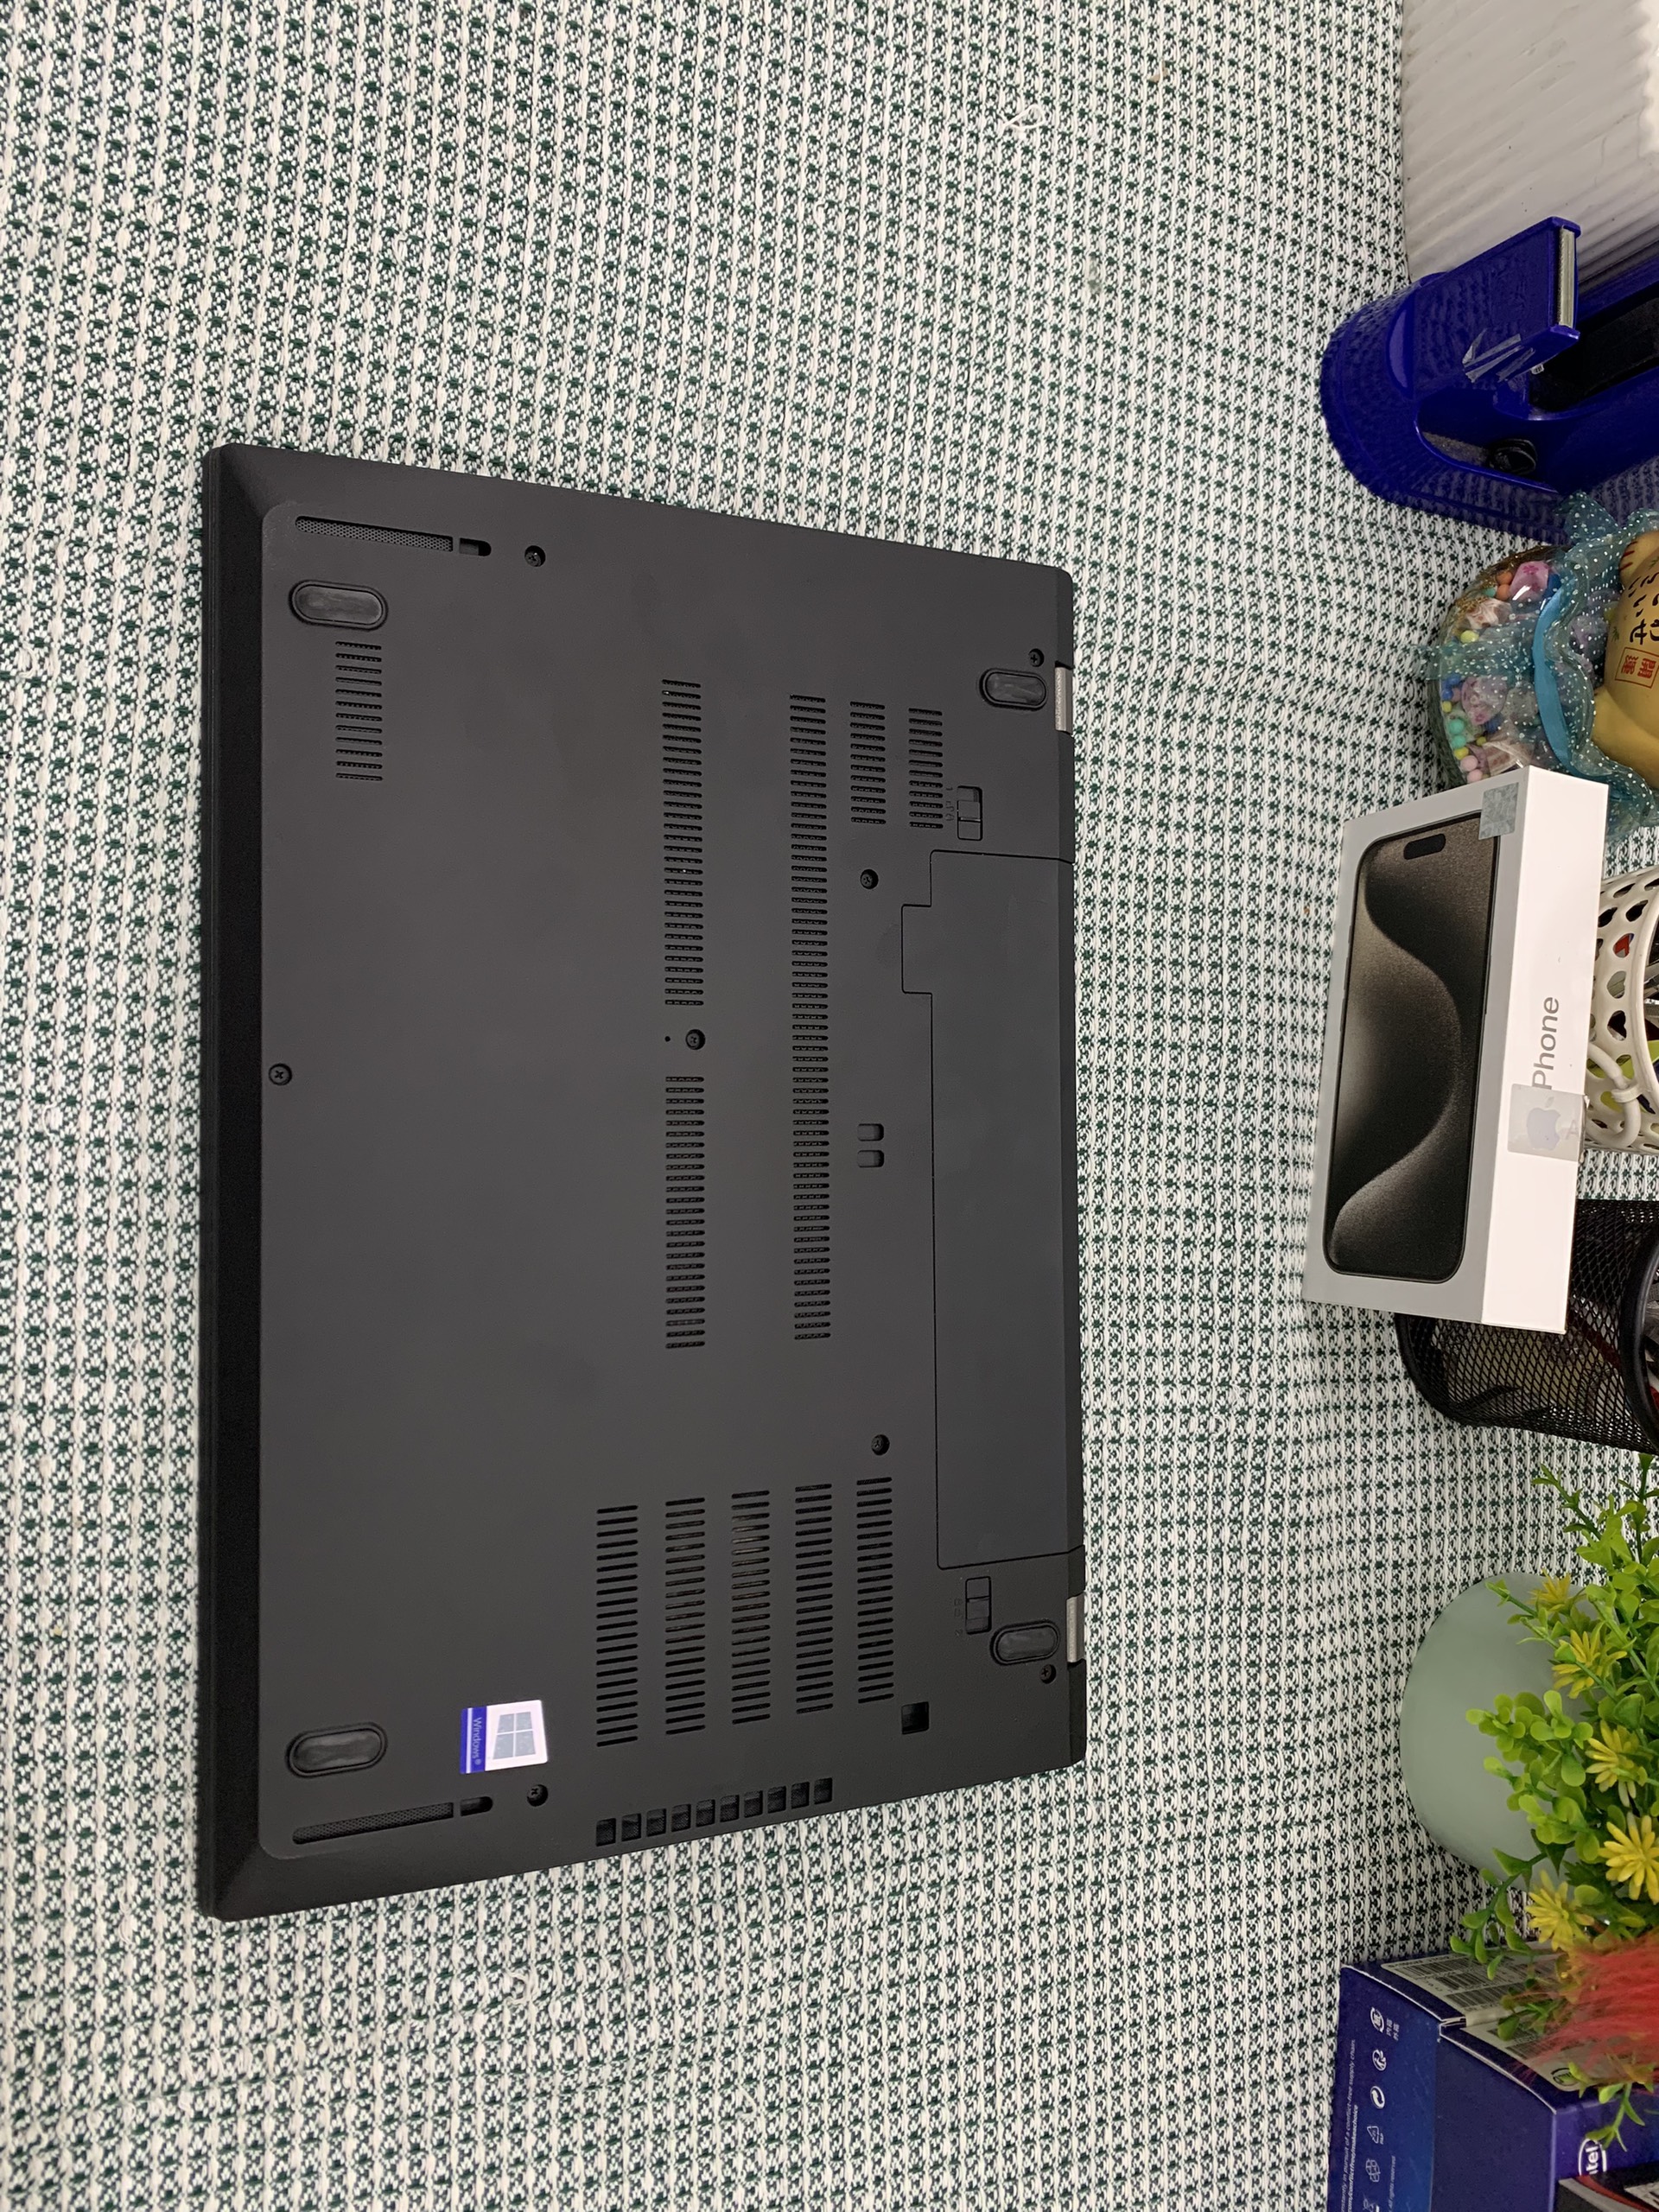 ThinkPad T580